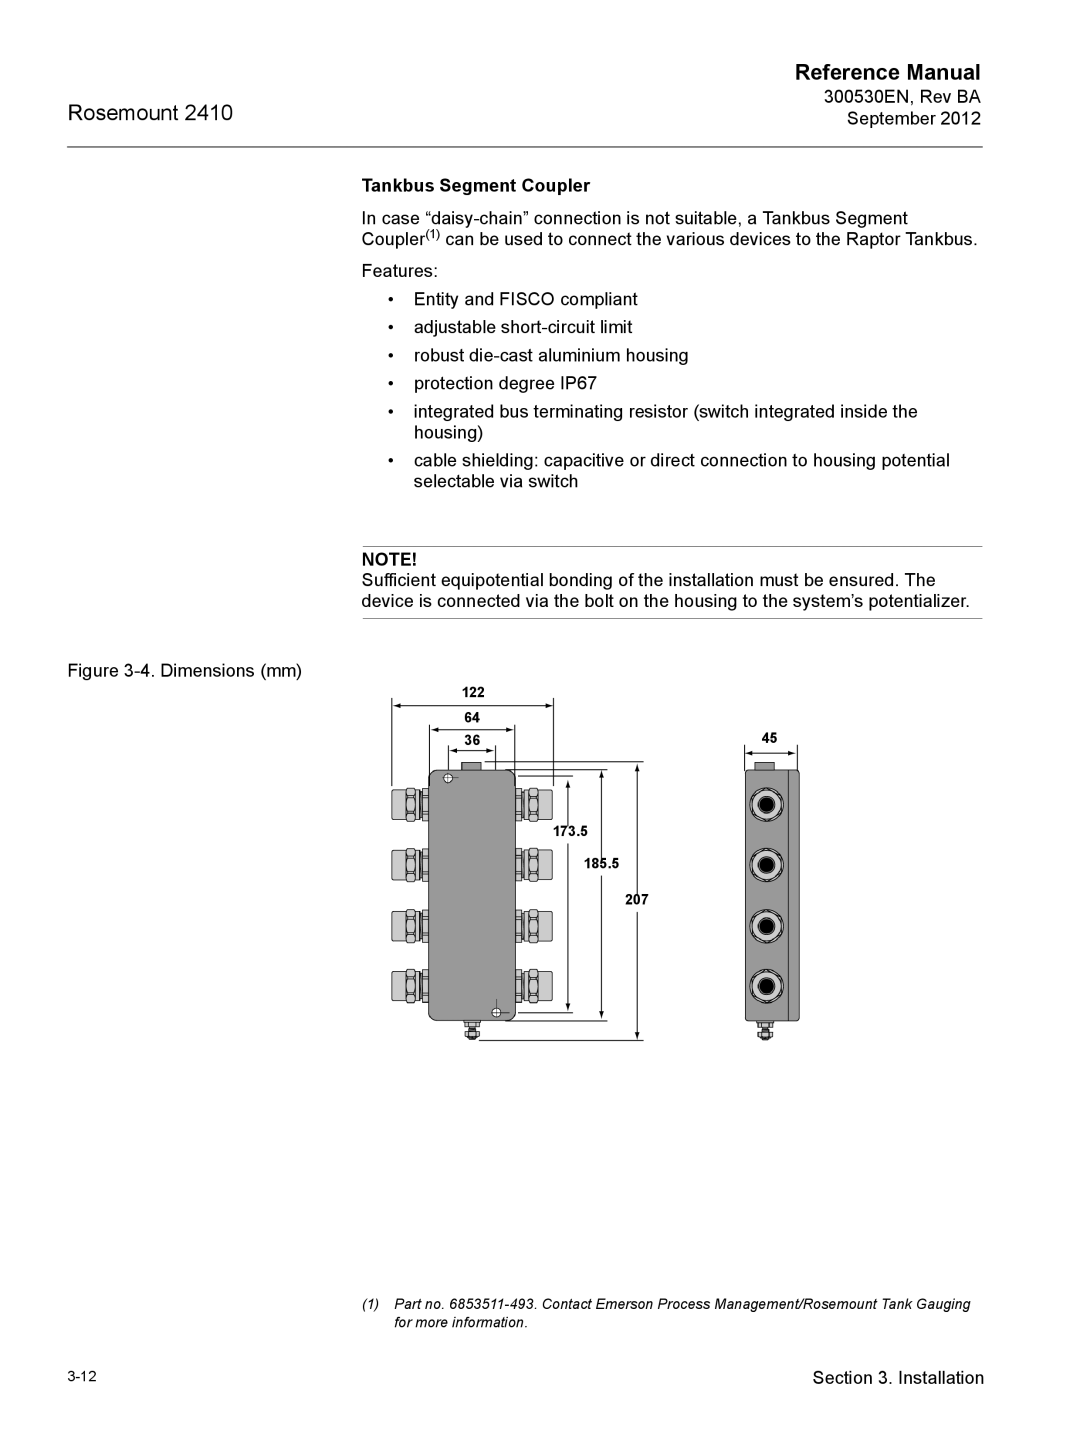 Emerson Process Management Rosemount 2410 manual Tankbus Segment Coupler, Reference Manual 